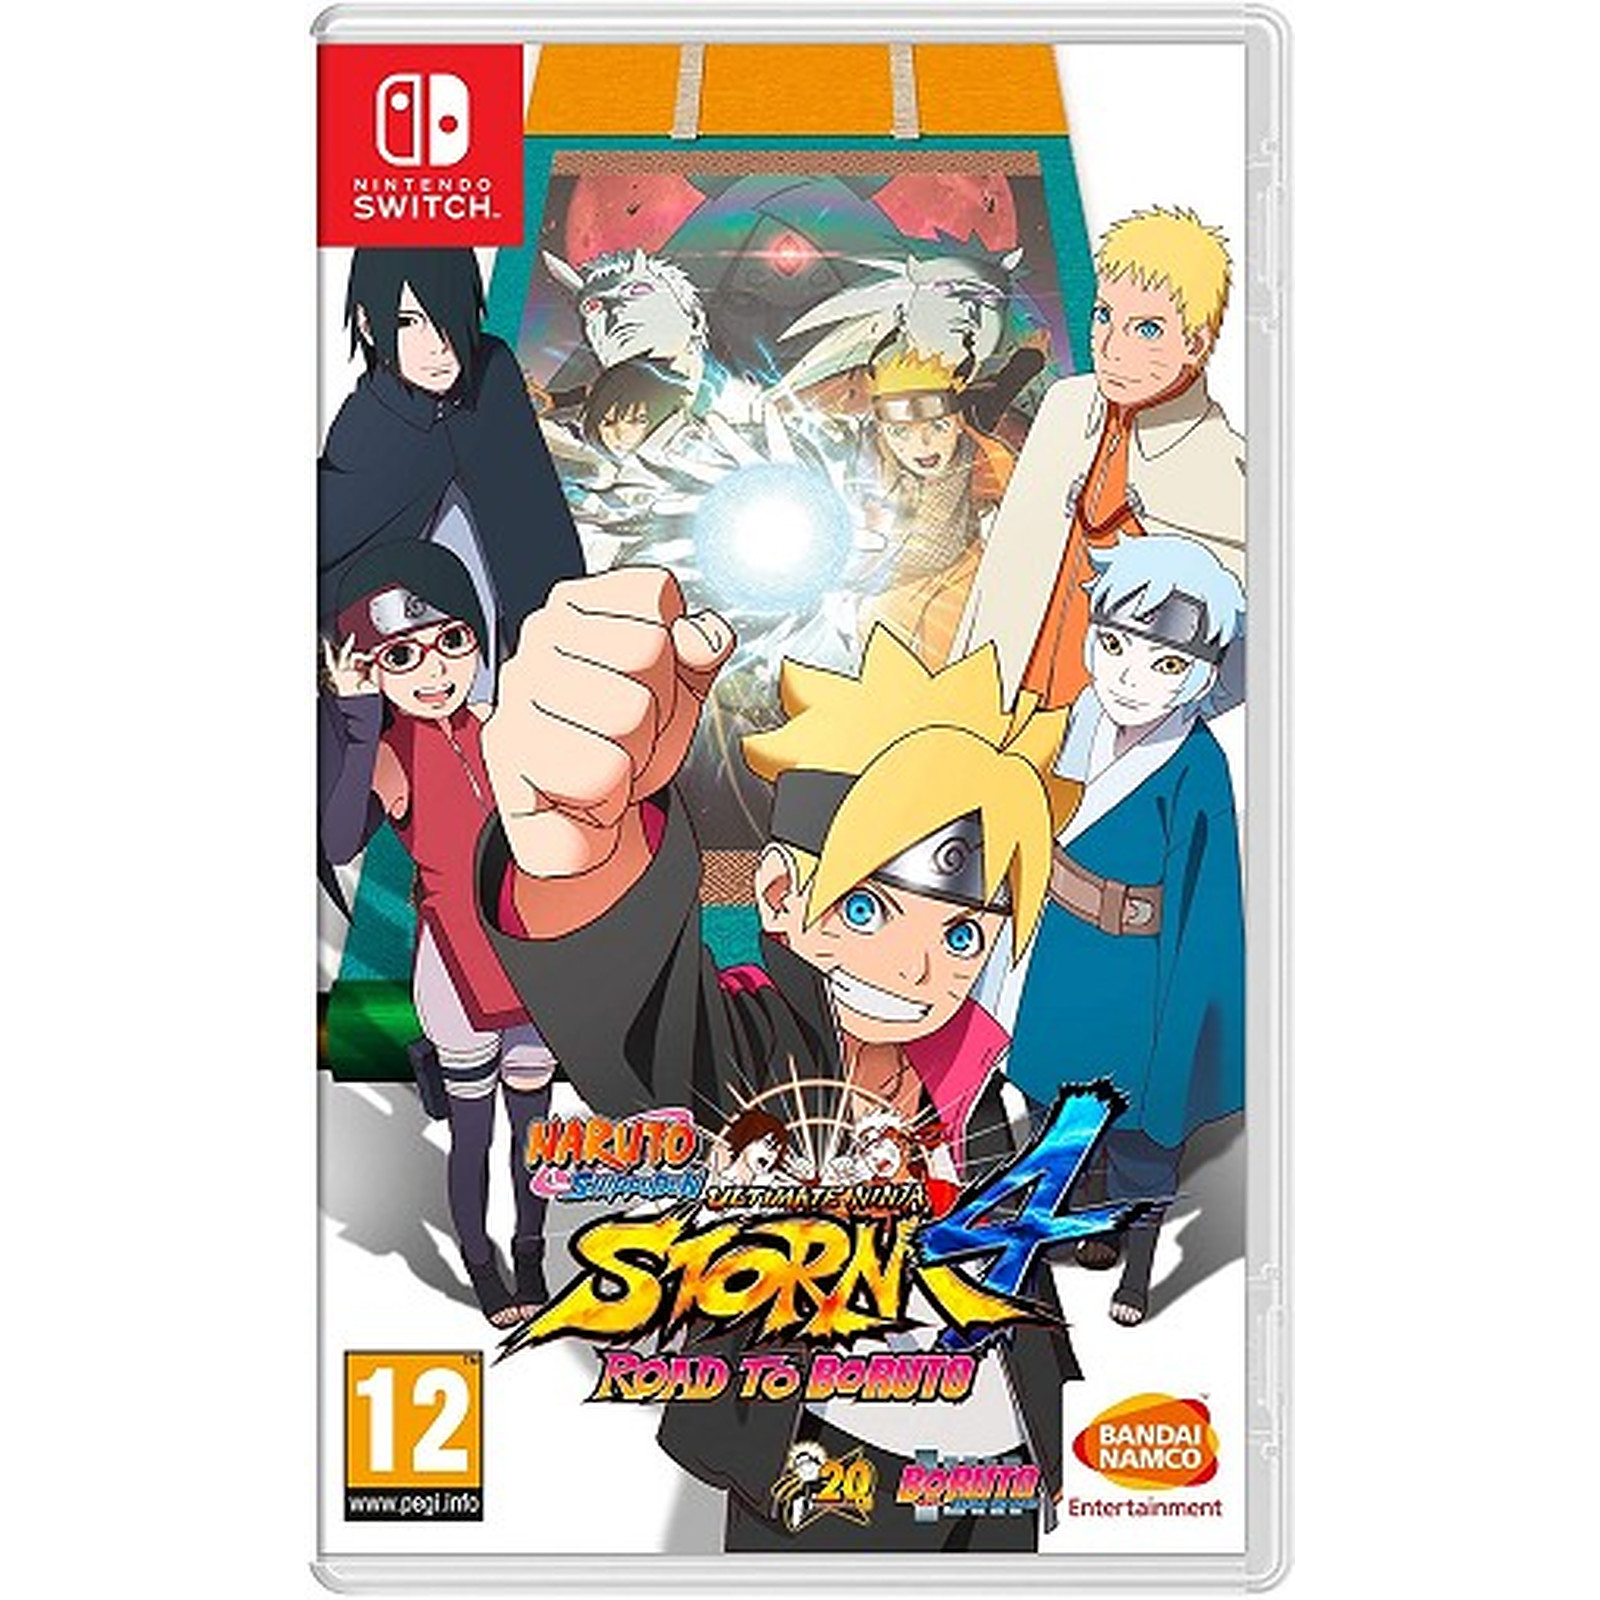 Naruto Shippuden Ultimate Ninja Storm 4 Road to Boruto (SWITCH) - Jeux Nintendo Switch Bandai Namco Games